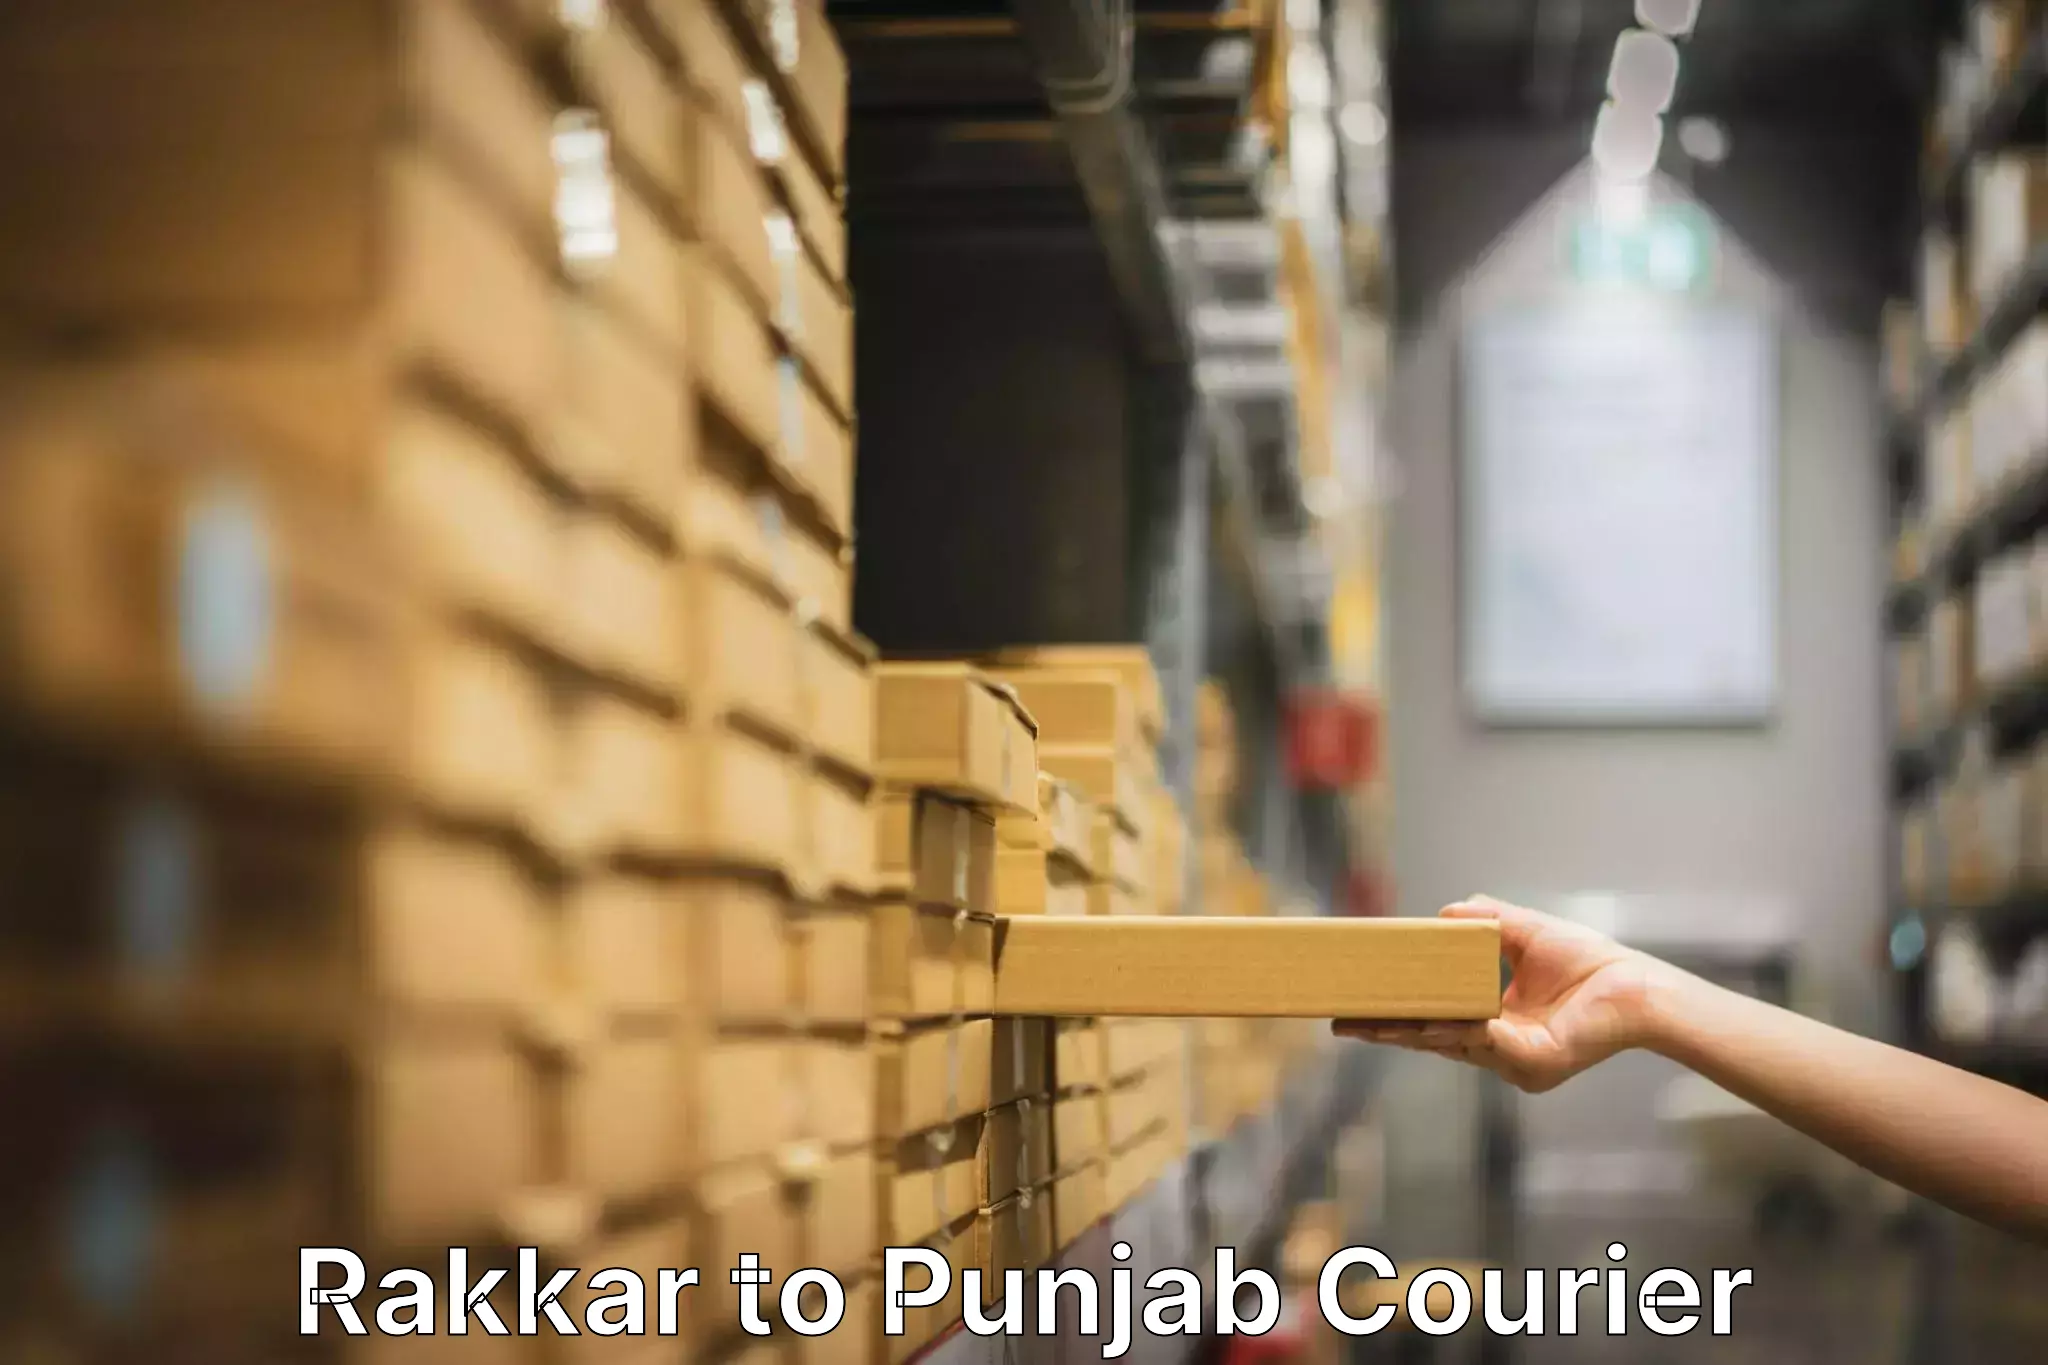 Professional moving assistance Rakkar to Punjab